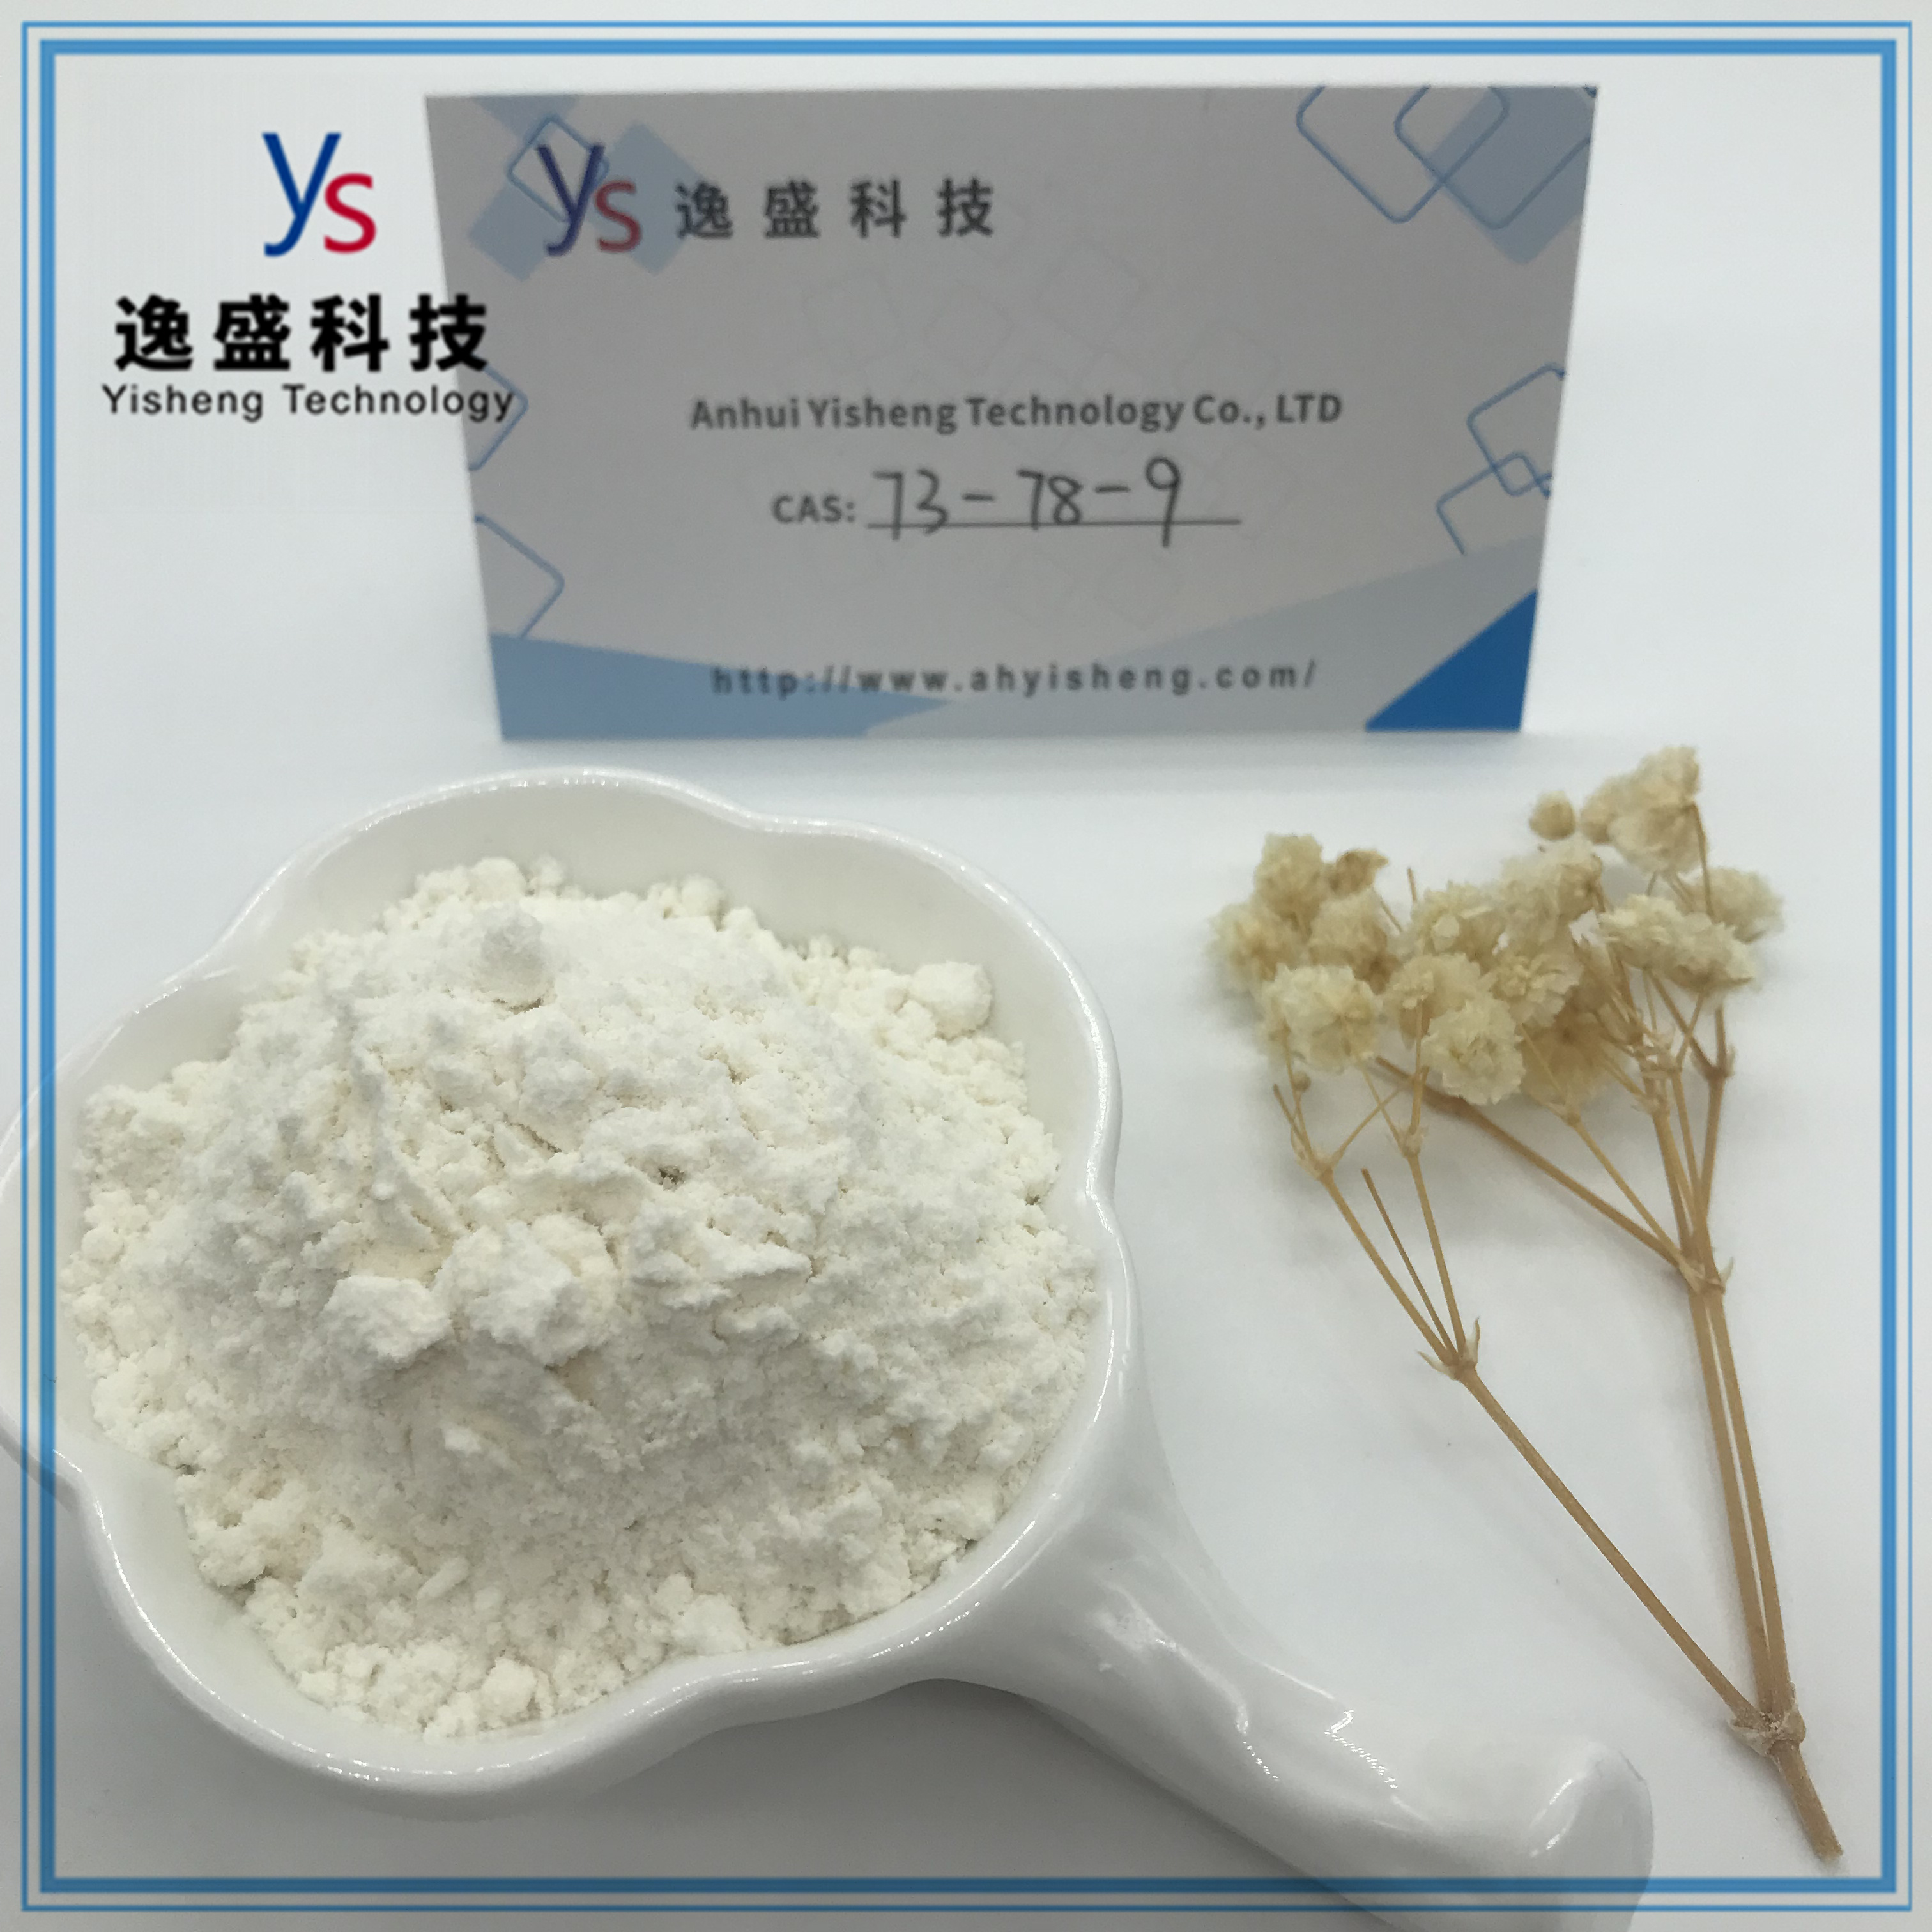 CAS 73-78-9 Lidocaïne hydrochloride Topkwaliteit poeder 